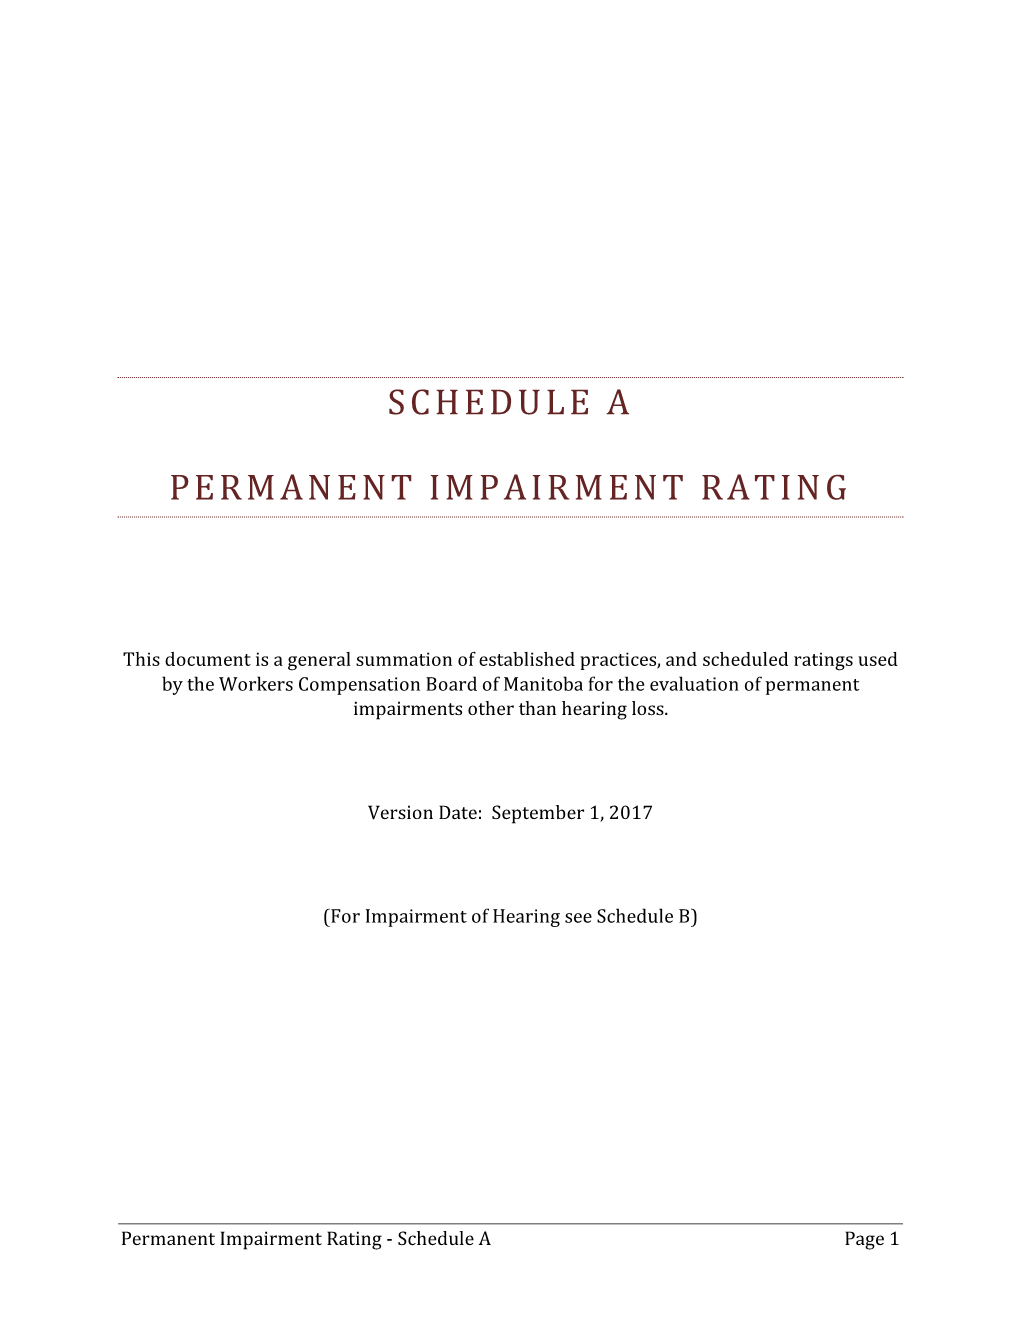 Schedule a Permanent Impairment Rating